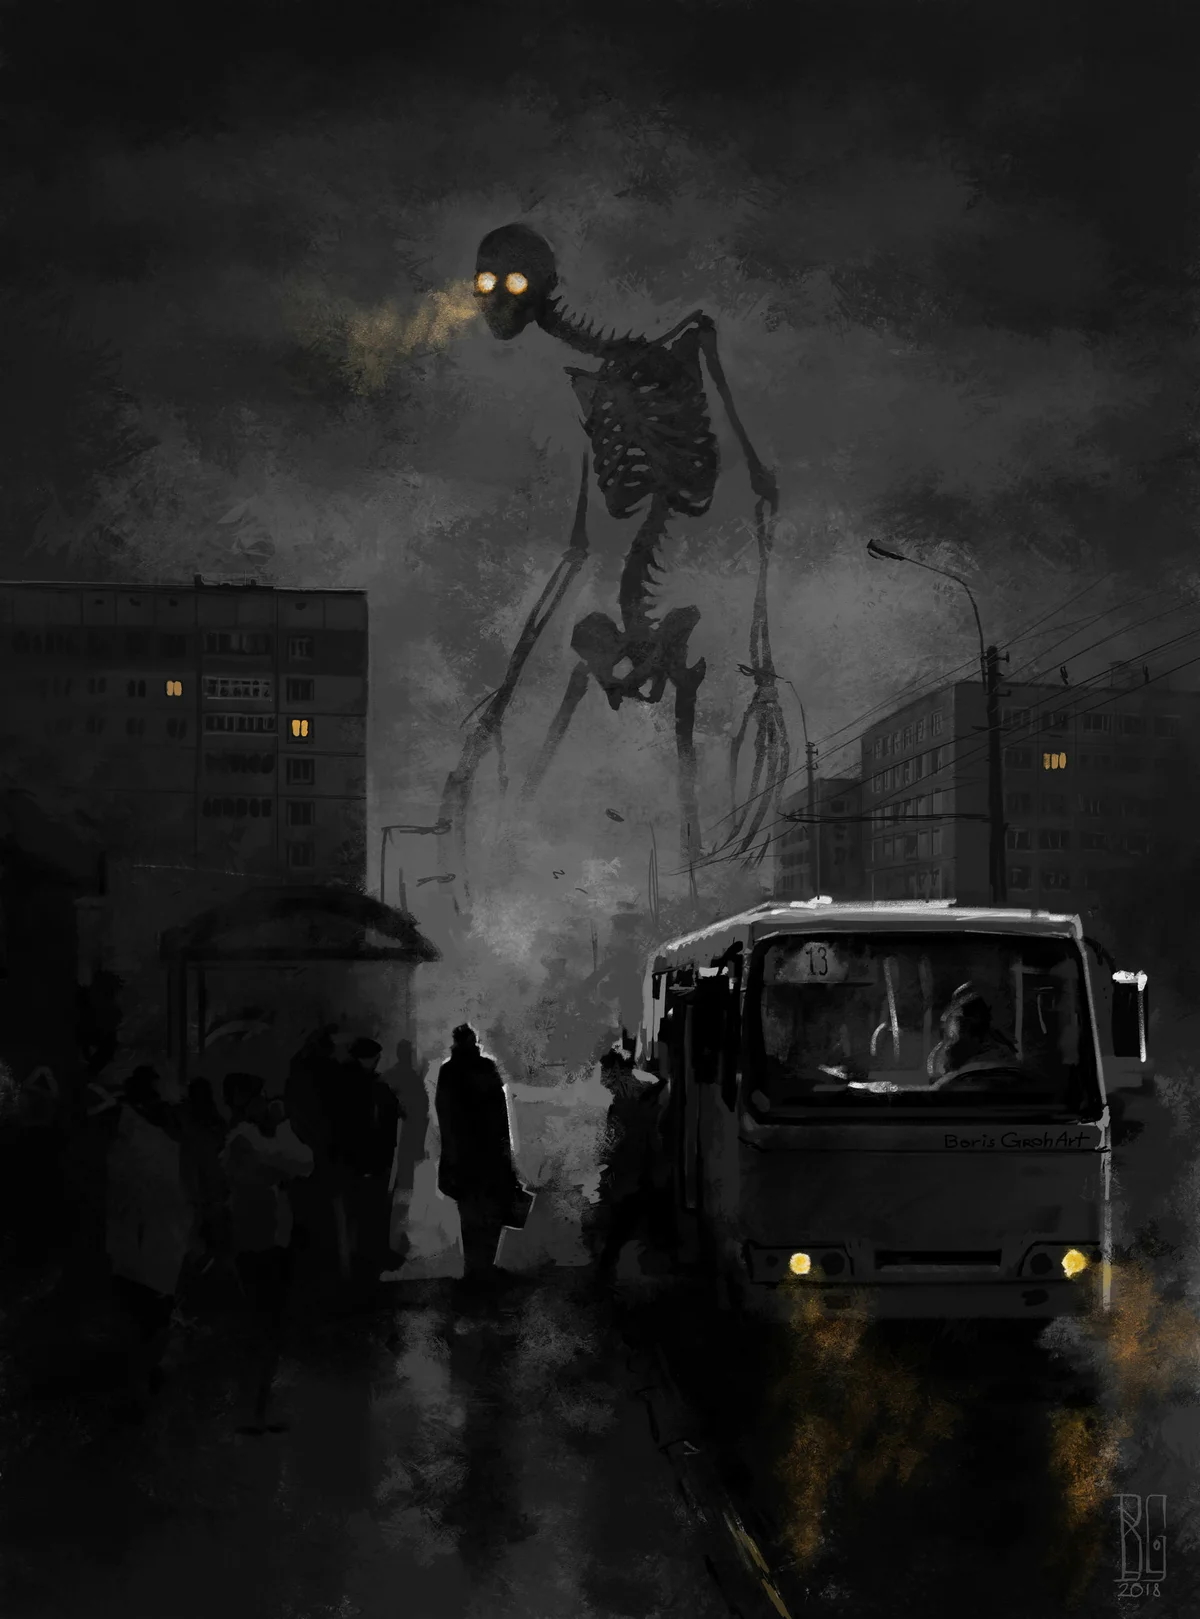 General 1200x1619 creepy creature giant skeleton city car artwork horror dark vehicle